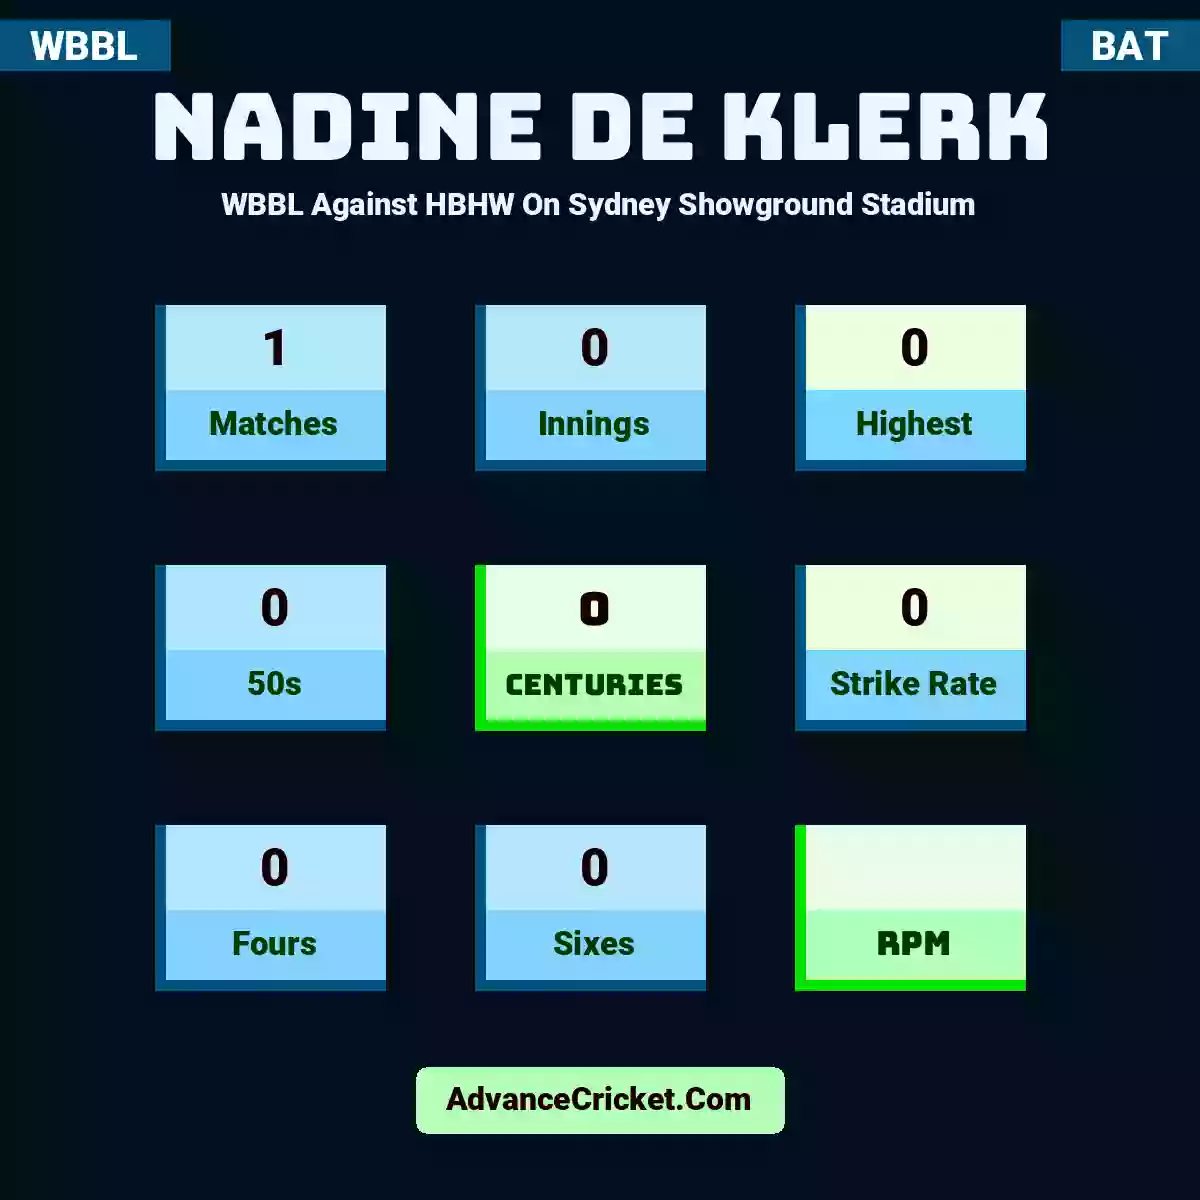 Nadine de Klerk WBBL  Against HBHW On Sydney Showground Stadium, Nadine de Klerk played 1 matches, scored 0 runs as highest, 0 half-centuries, and 0 centuries, with a strike rate of 0. N.Klerk hit 0 fours and 0 sixes.